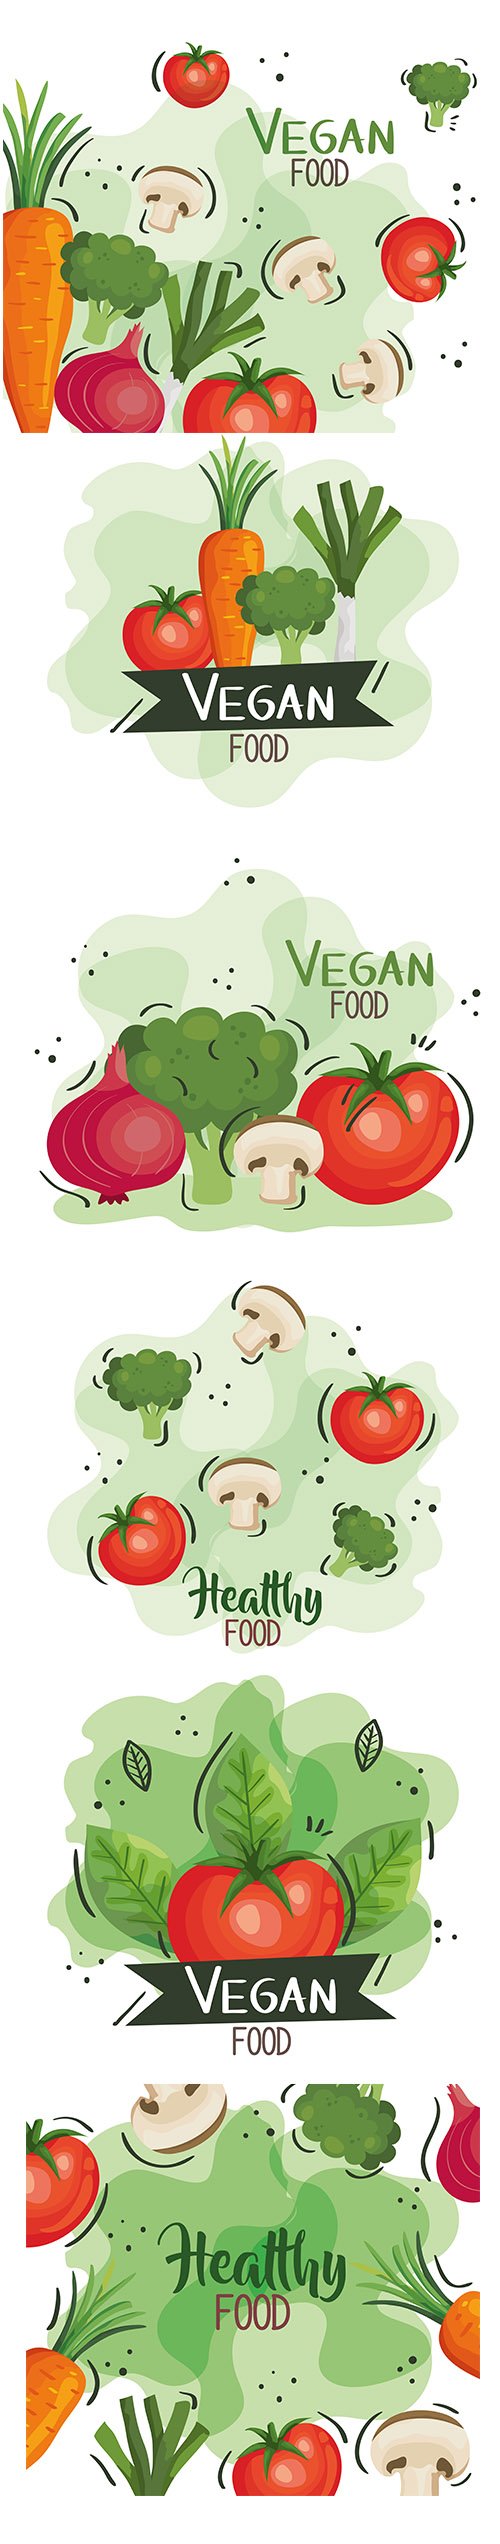 Vegan Food Poster with Vegetables